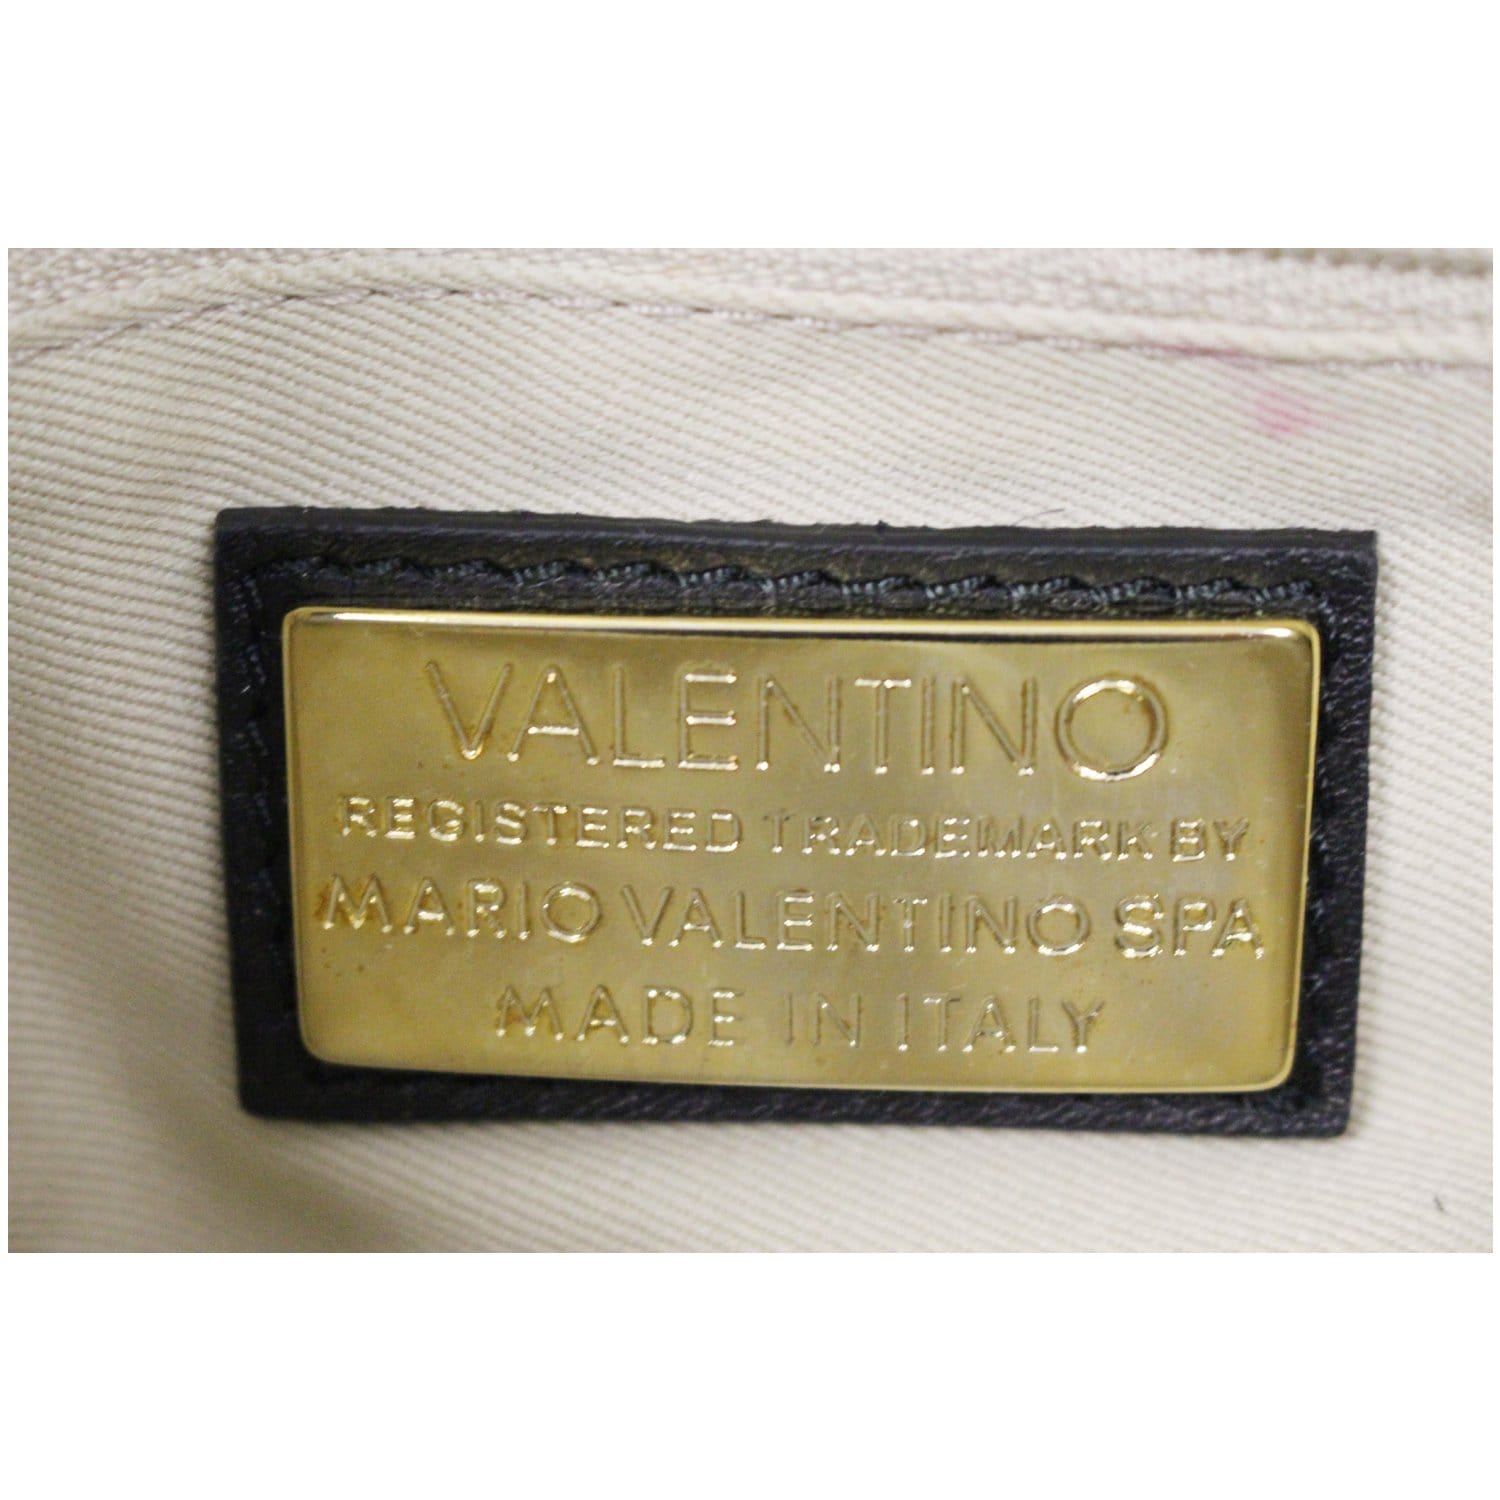 Valentino by Mario Valentino Spa